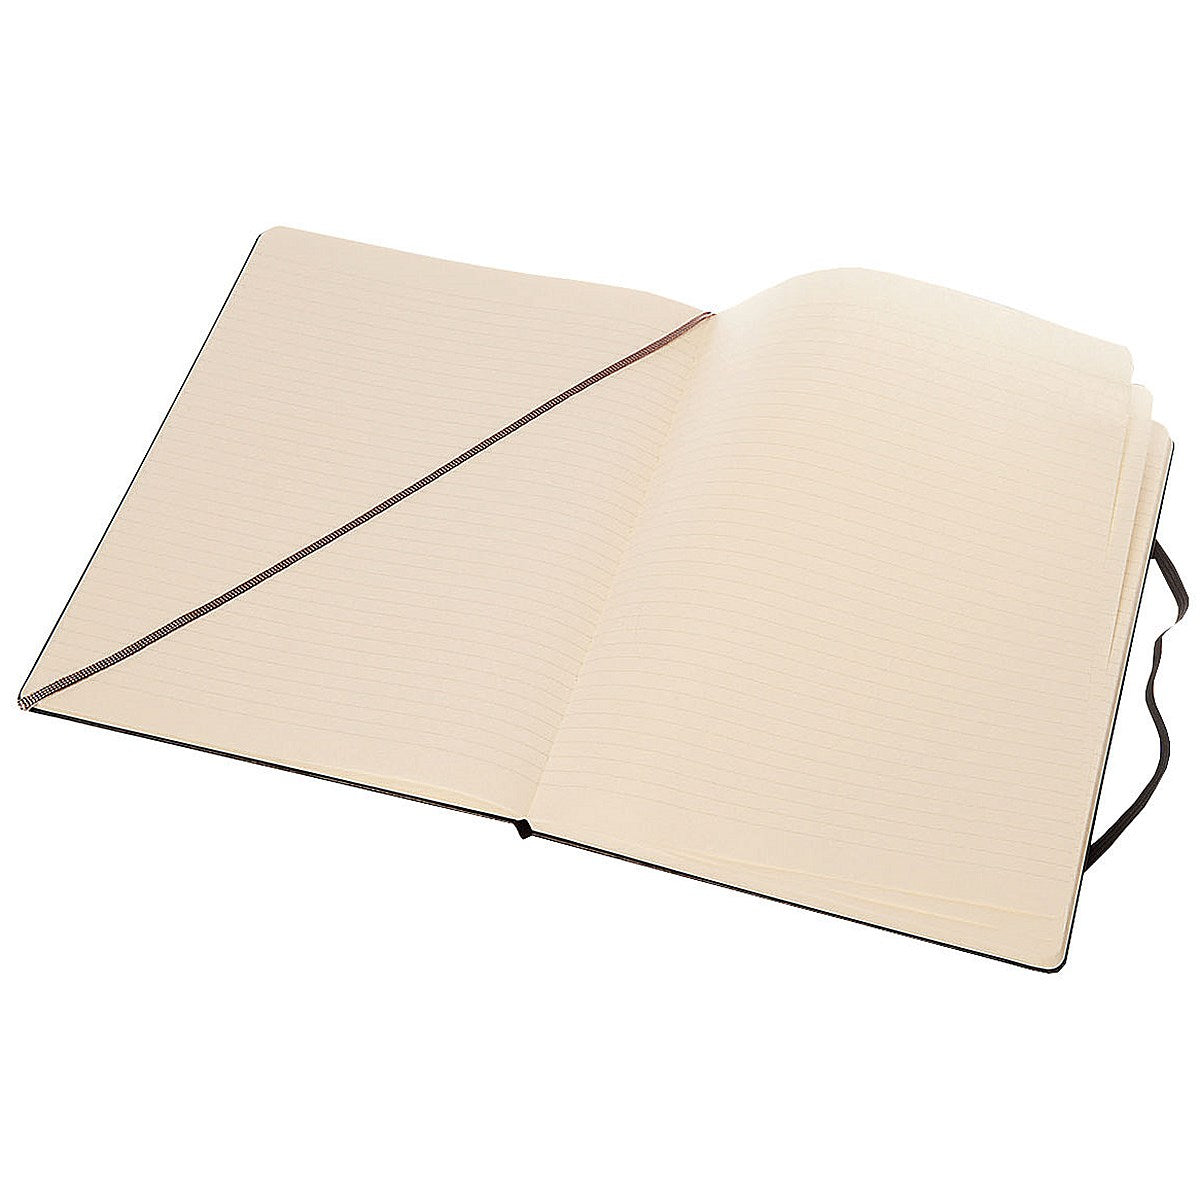 Moleskin A5 Classic Ruled Notebook Hard Cover